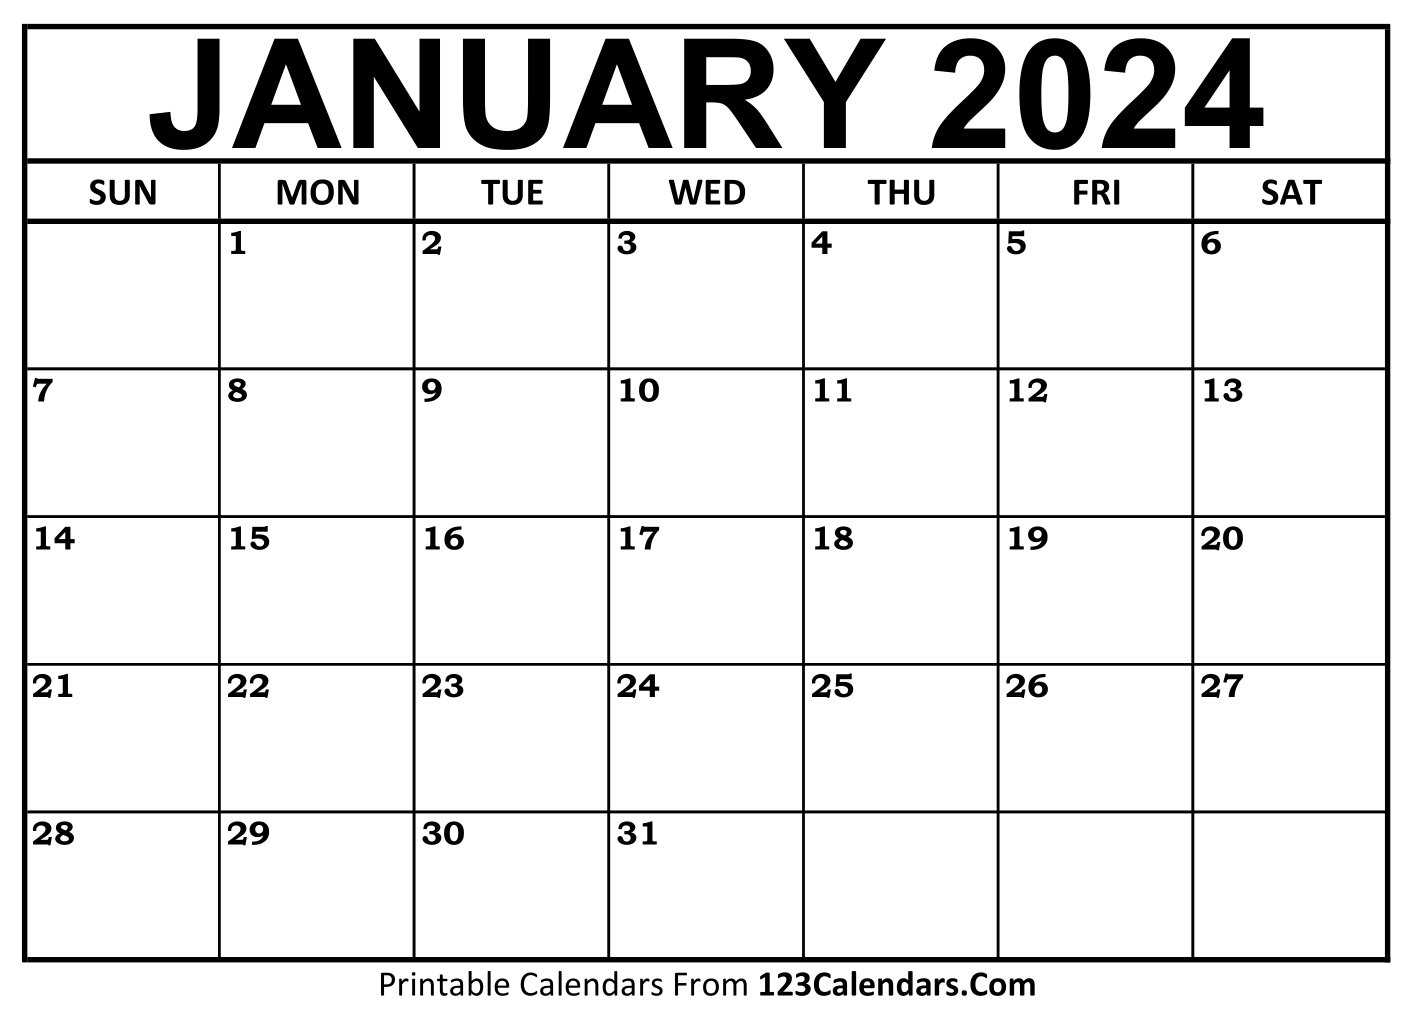 Printable January 2024 Calendar Templates - 123Calendars with regard to Free Printable Calendar 2024 January